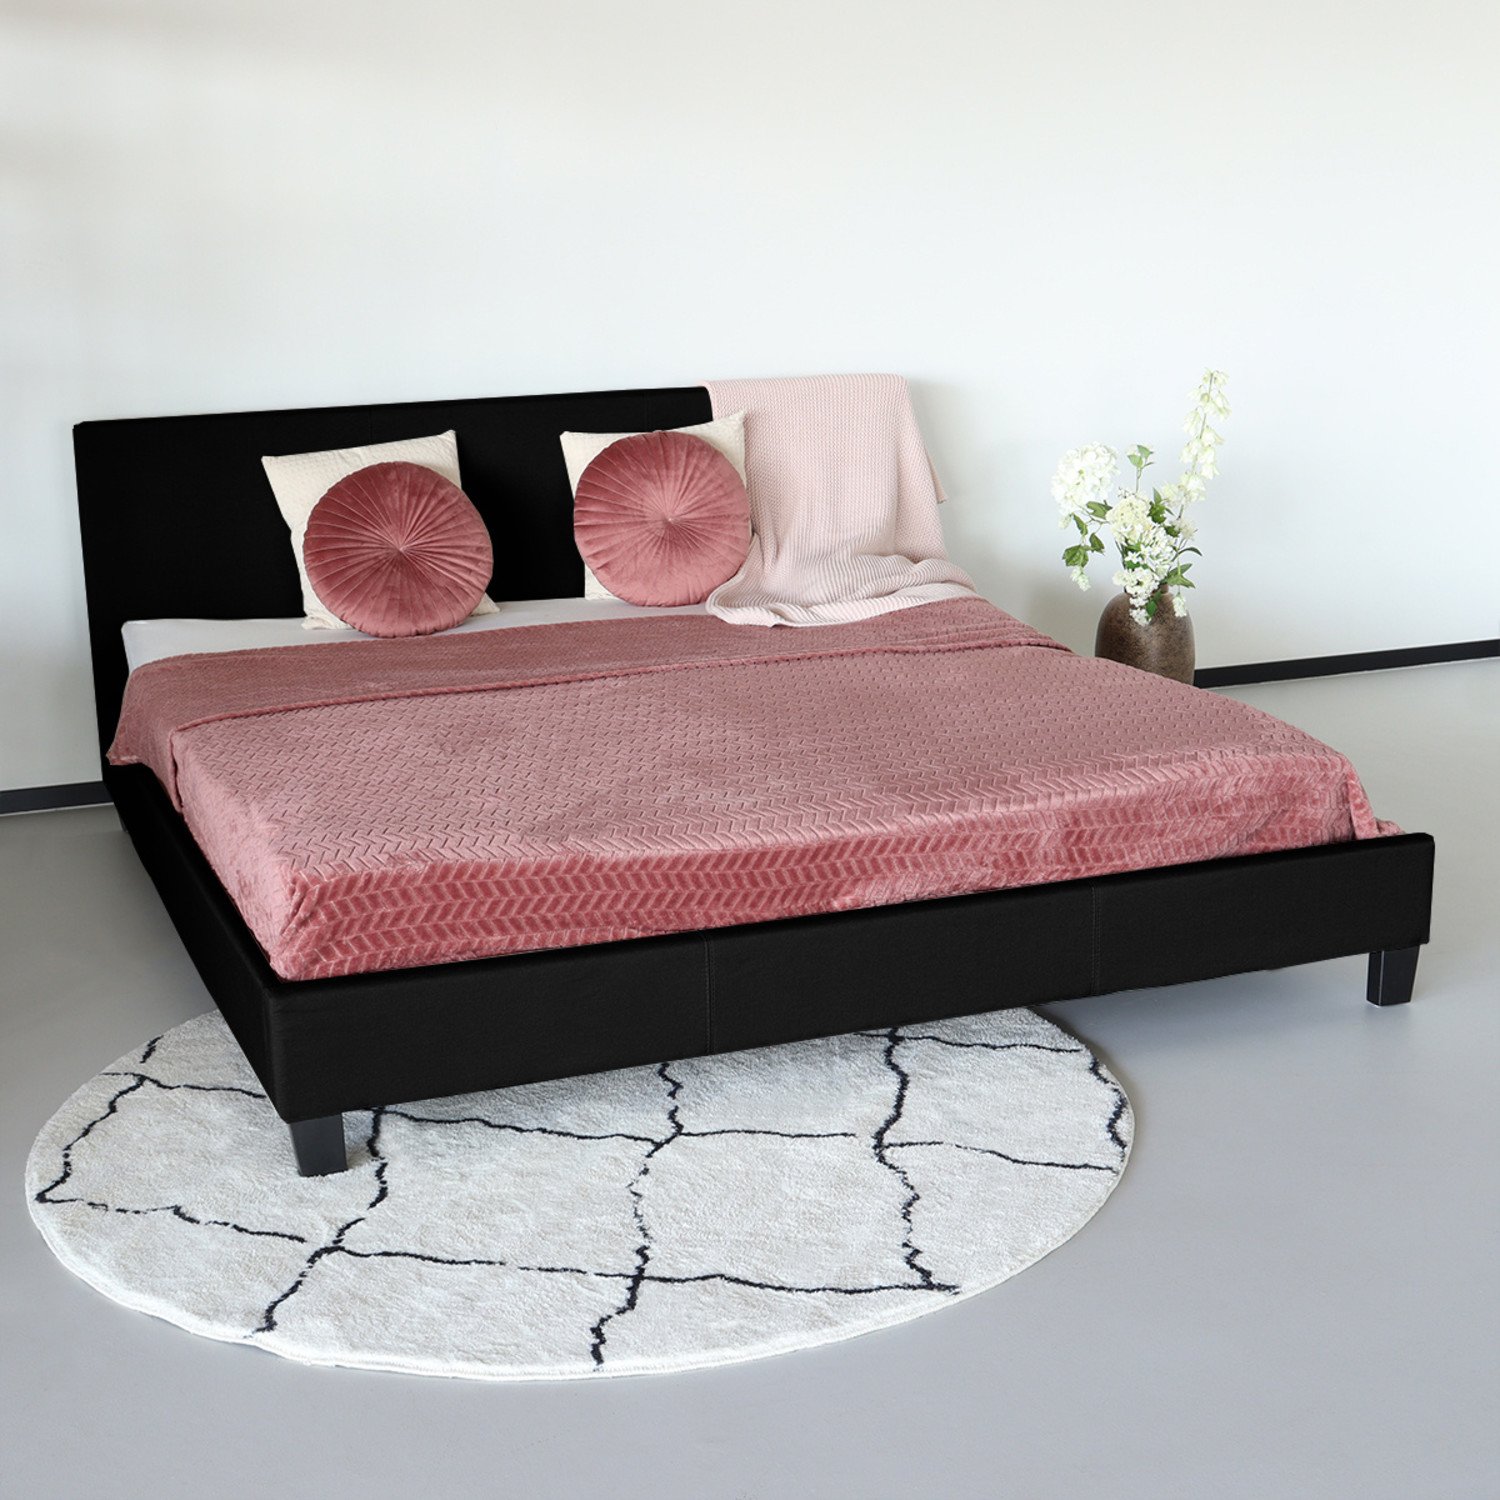 Bedframe Dico 180x200cm zwart bed ledikant - AQ-Living.com